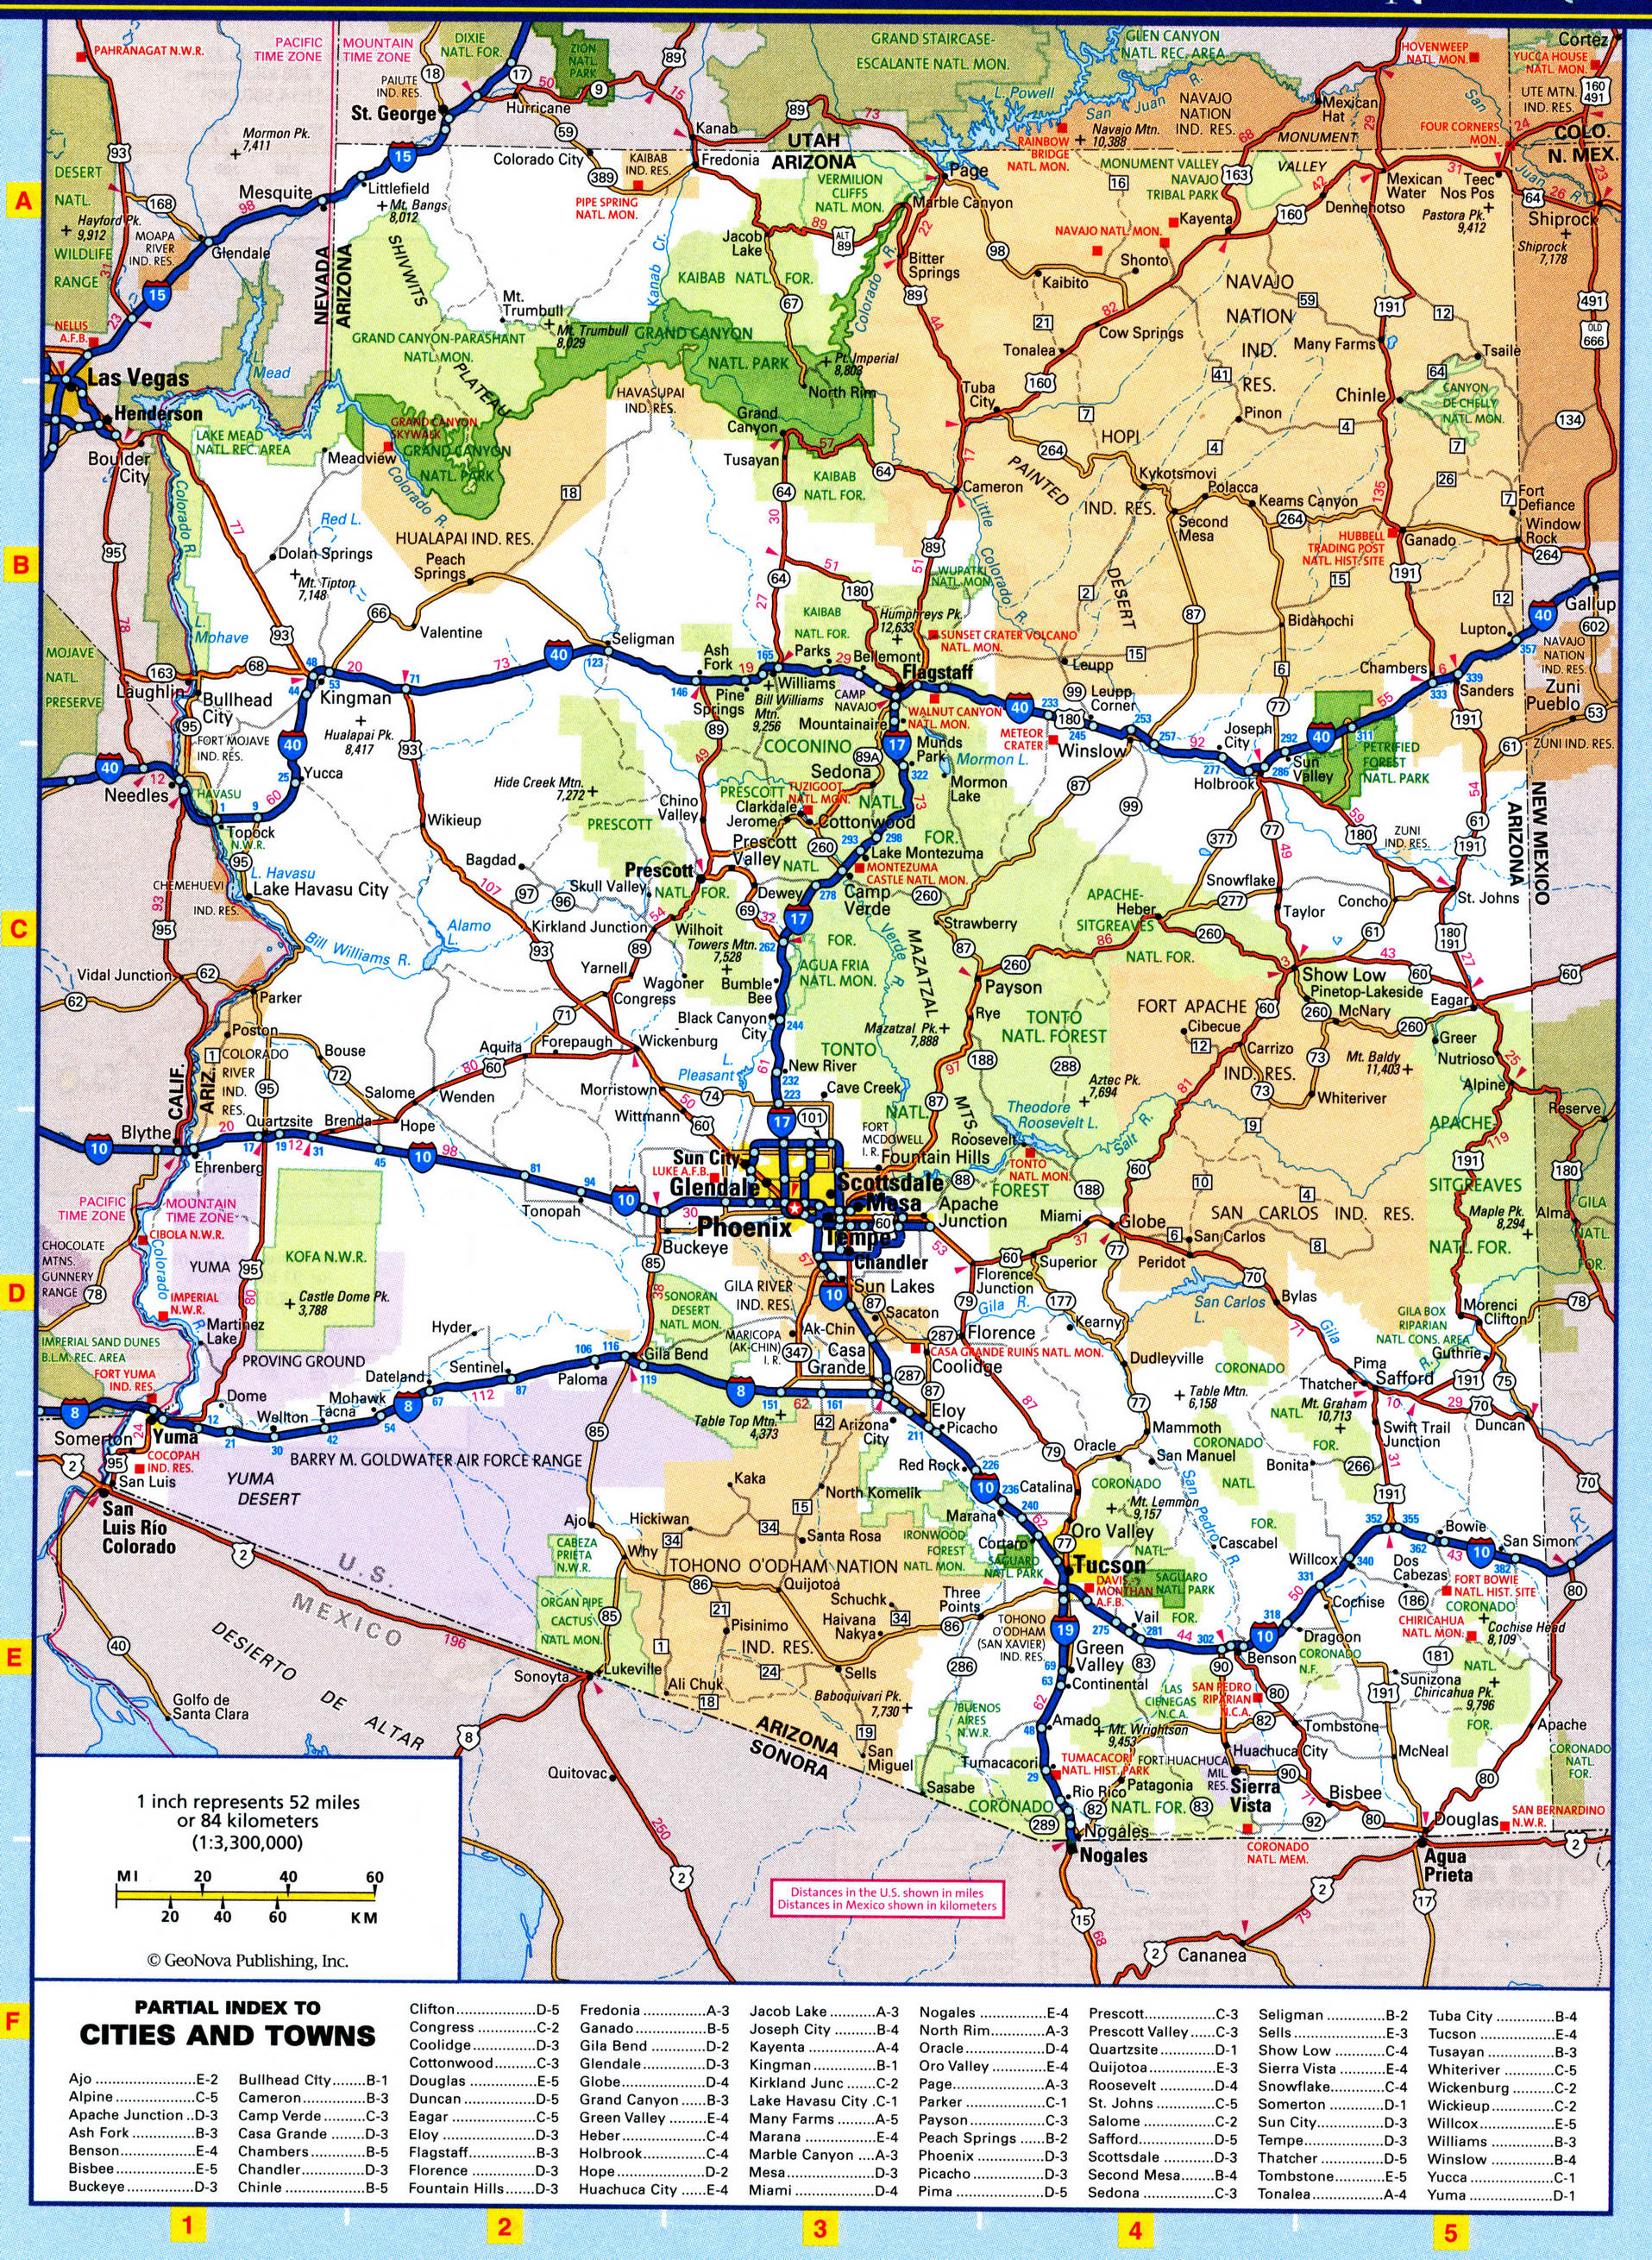 Arizona highway map